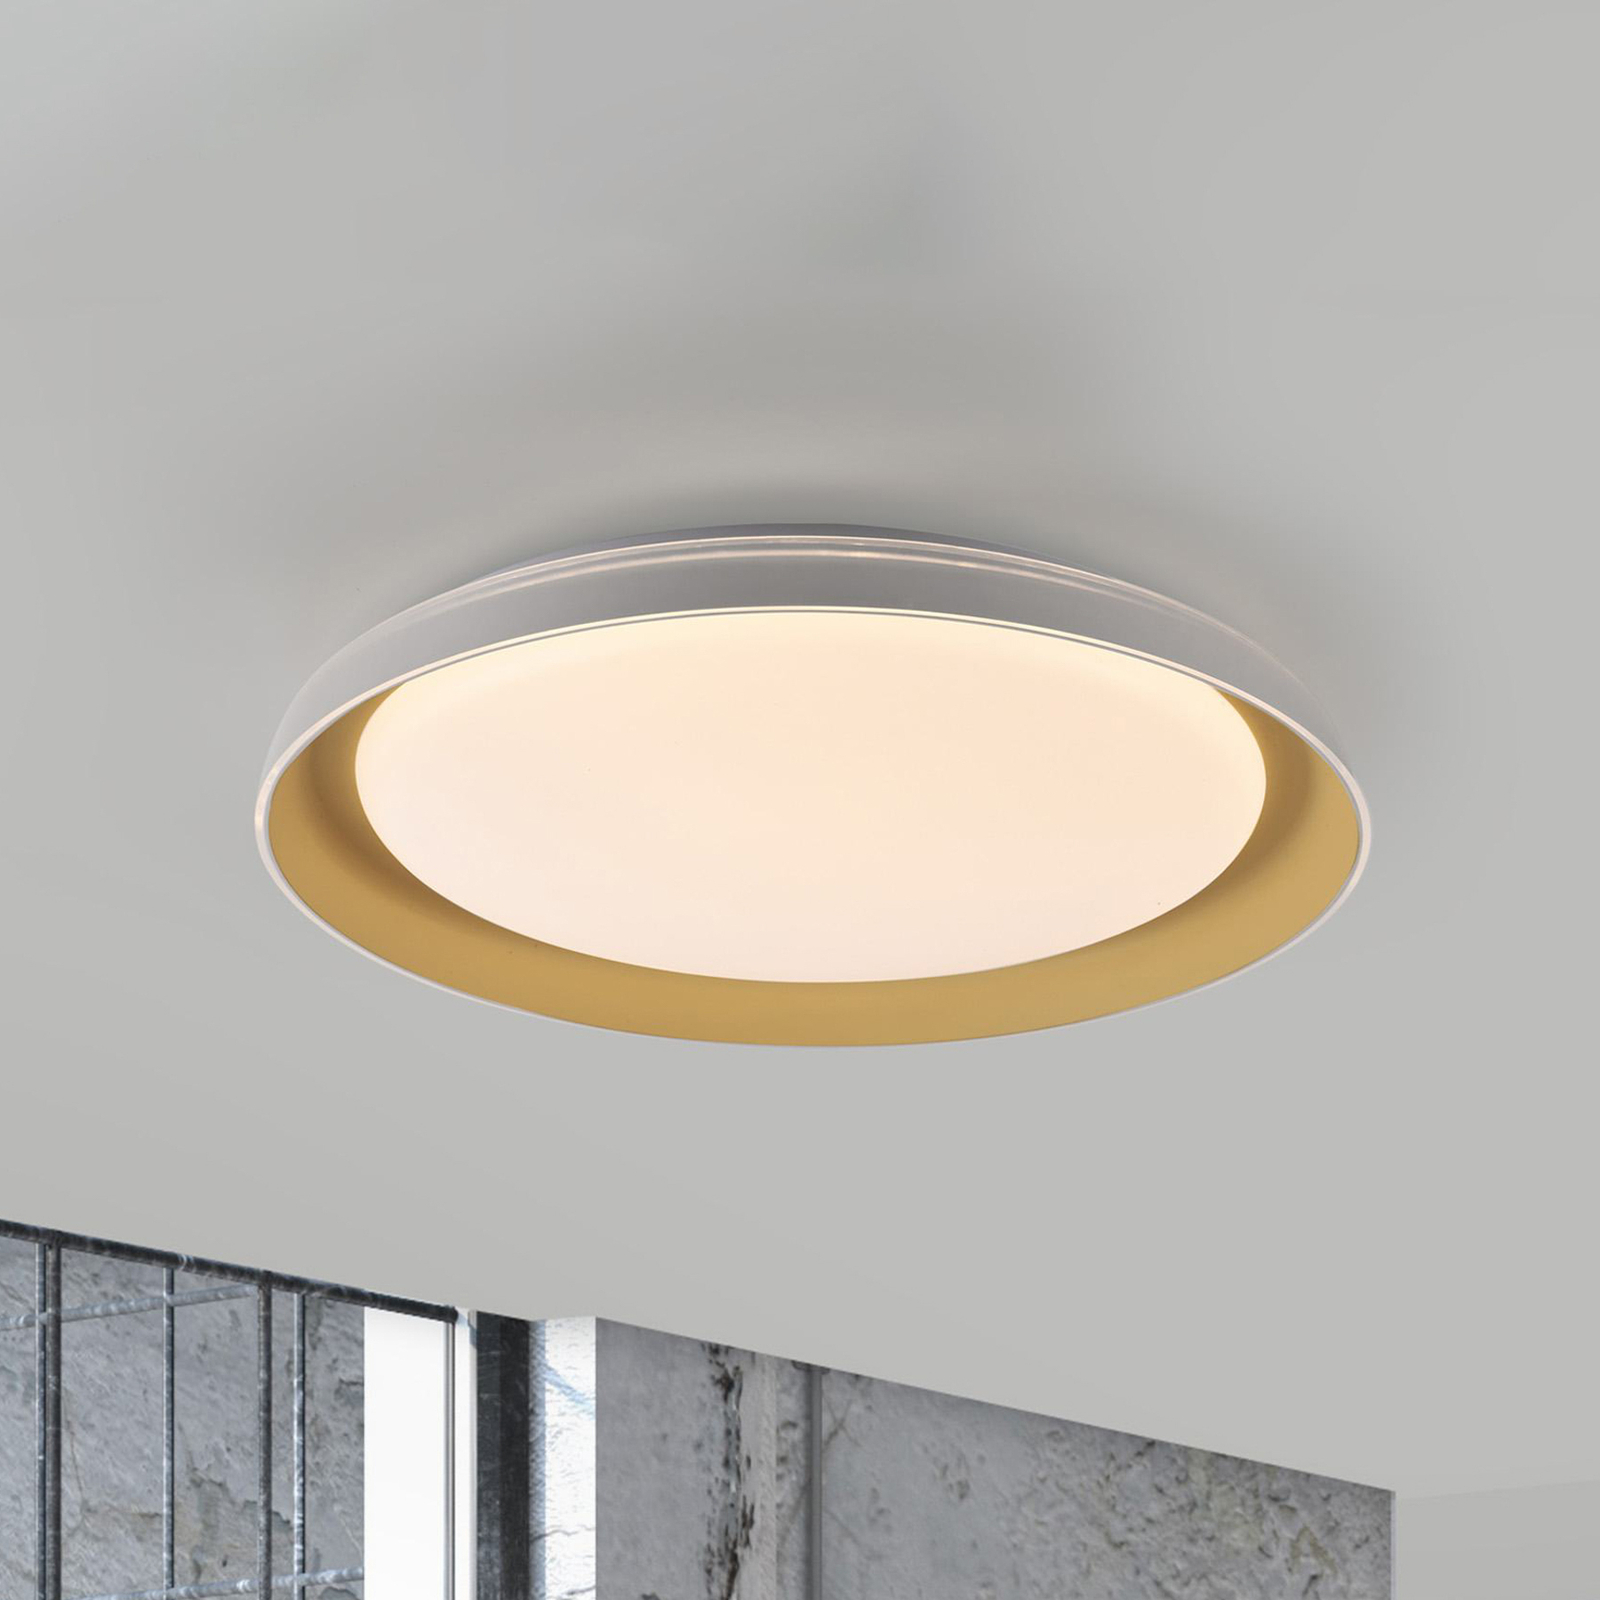 JUST LIGHT. Φωτιστικό οροφής Sati LED, πλαστικό, λευκό/ορείχαλκο